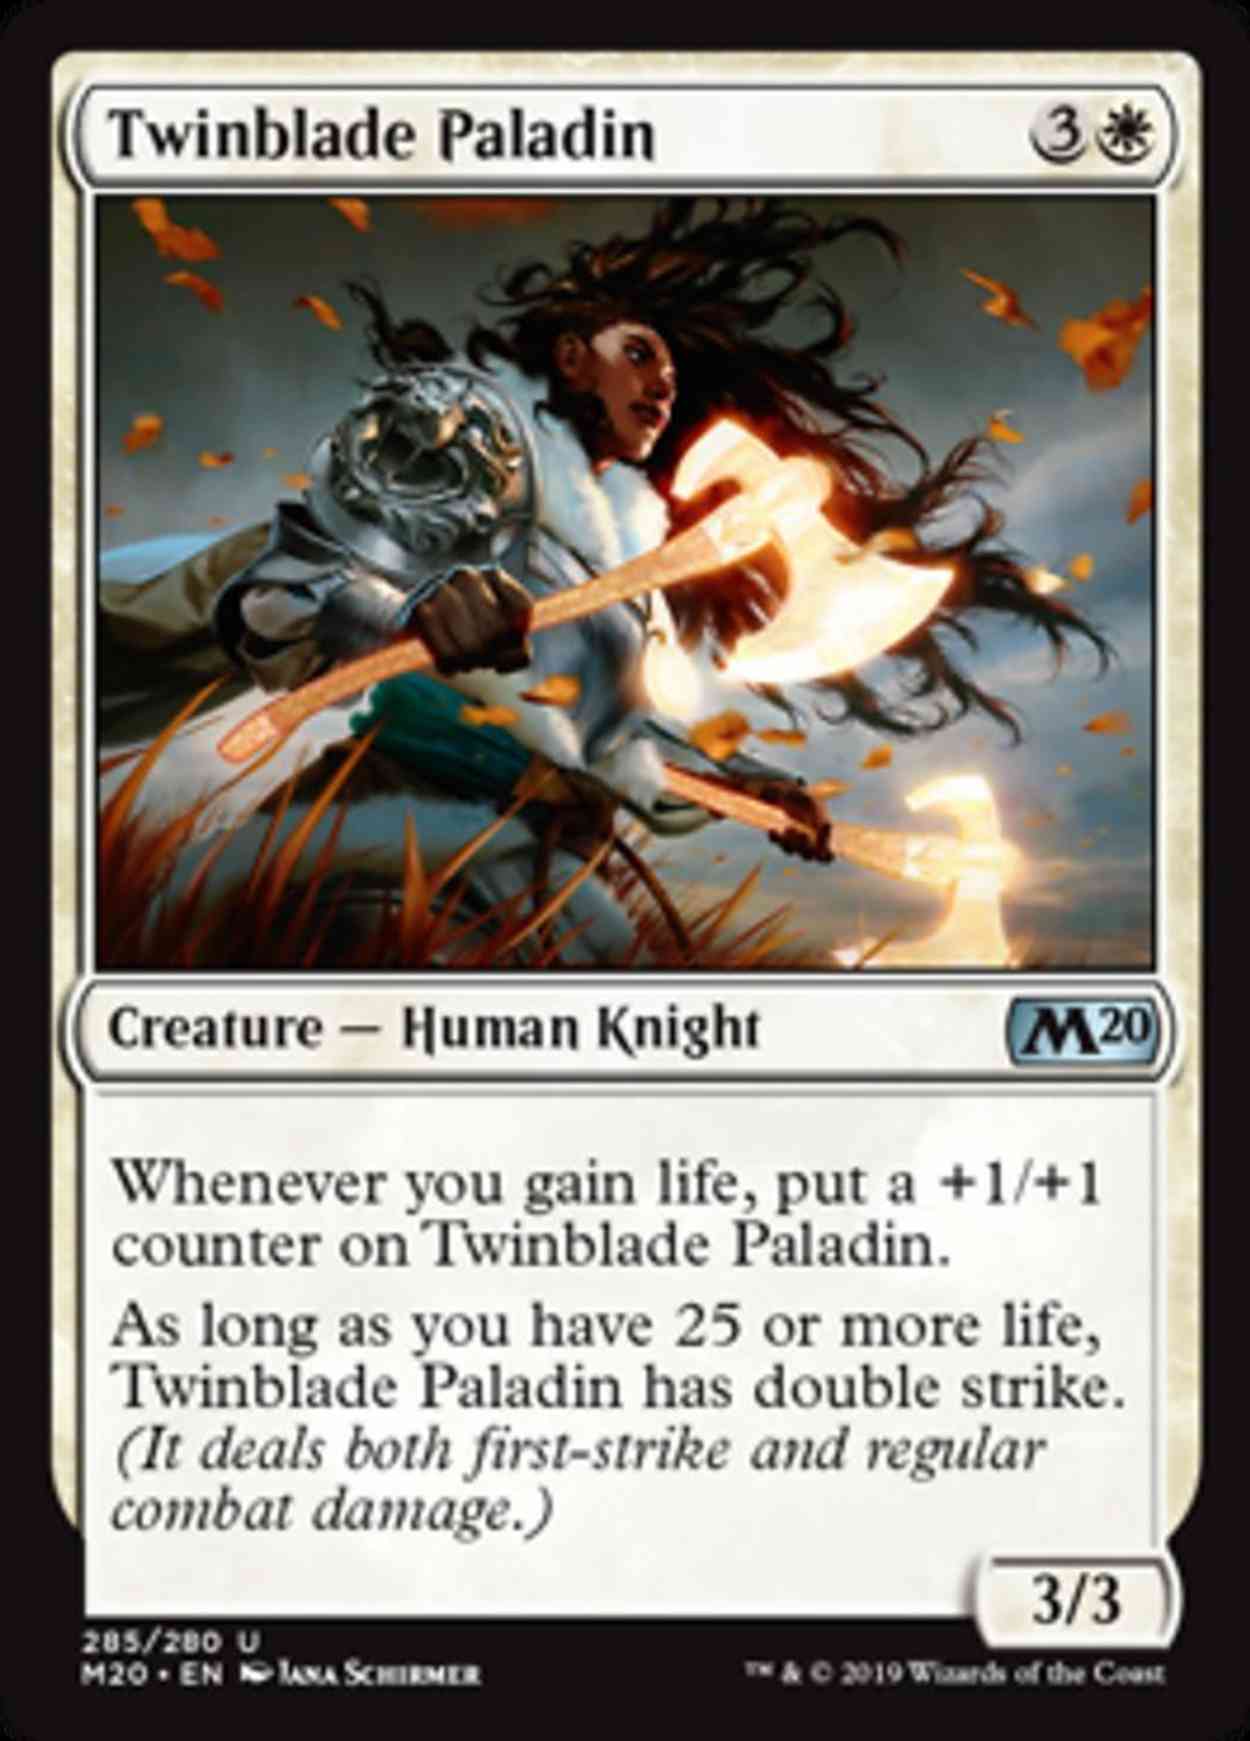 Twinblade Paladin magic card front